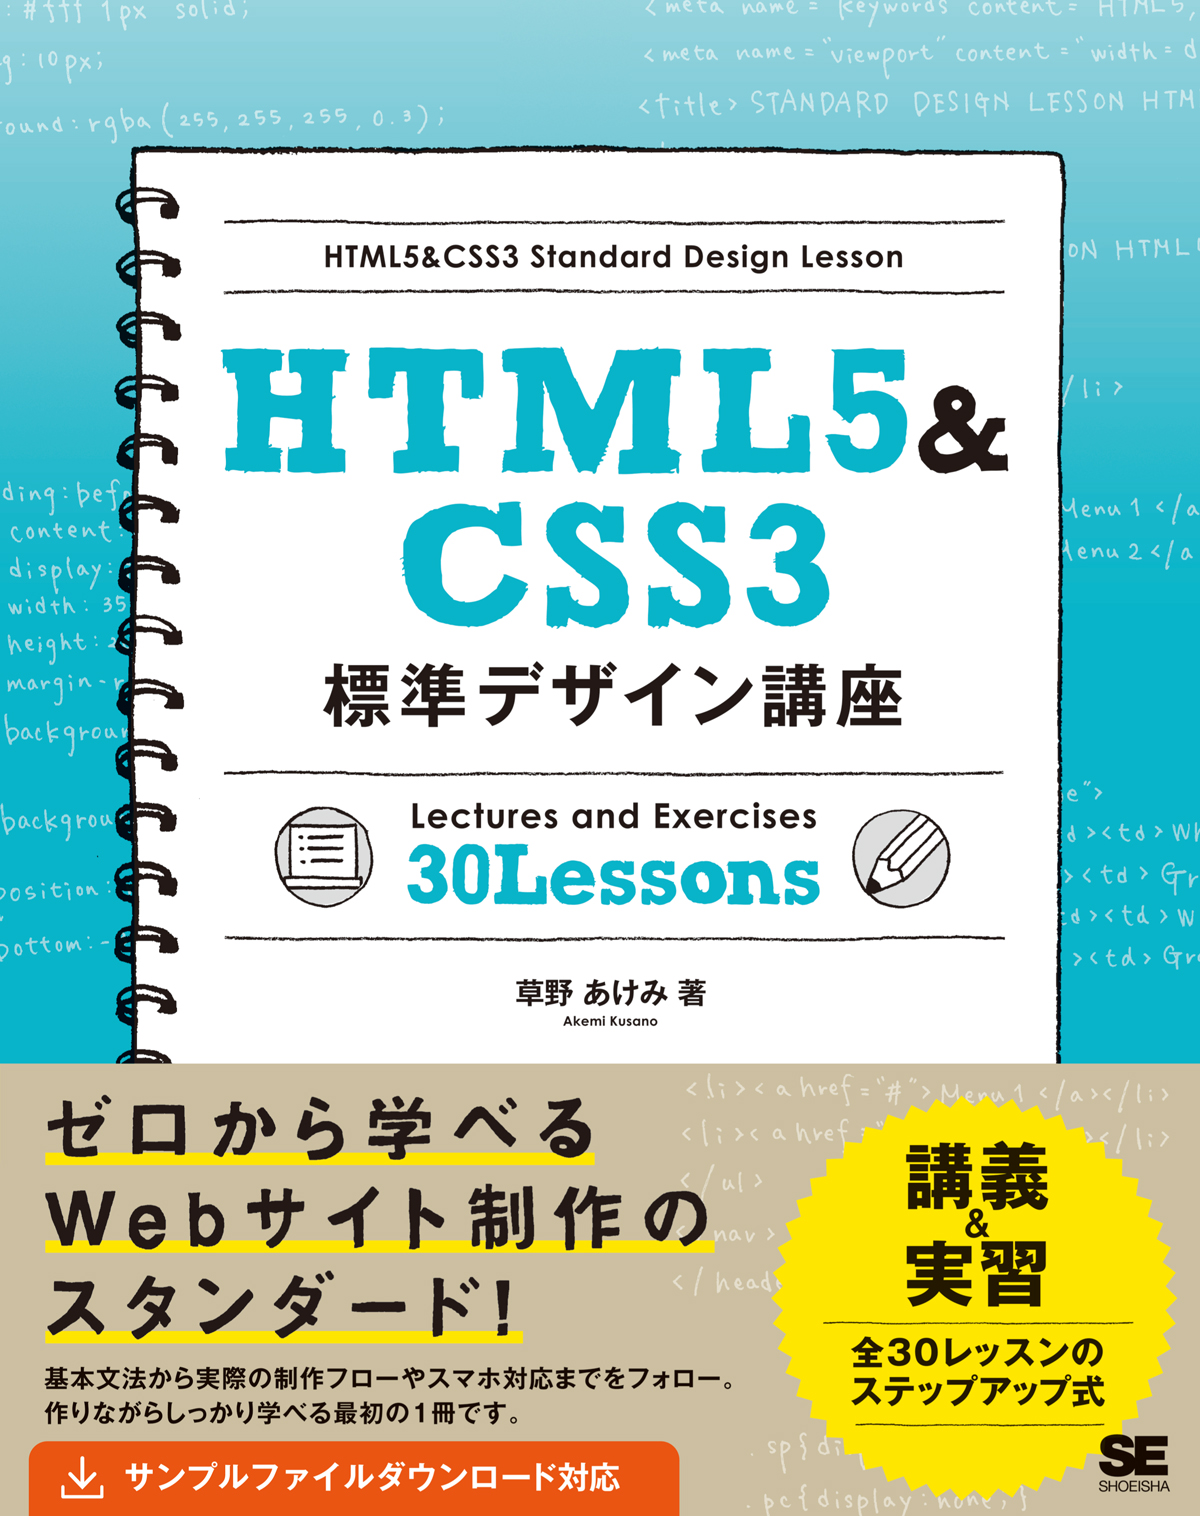 HTML5 & CSS3標準デザイン講座の商品画像